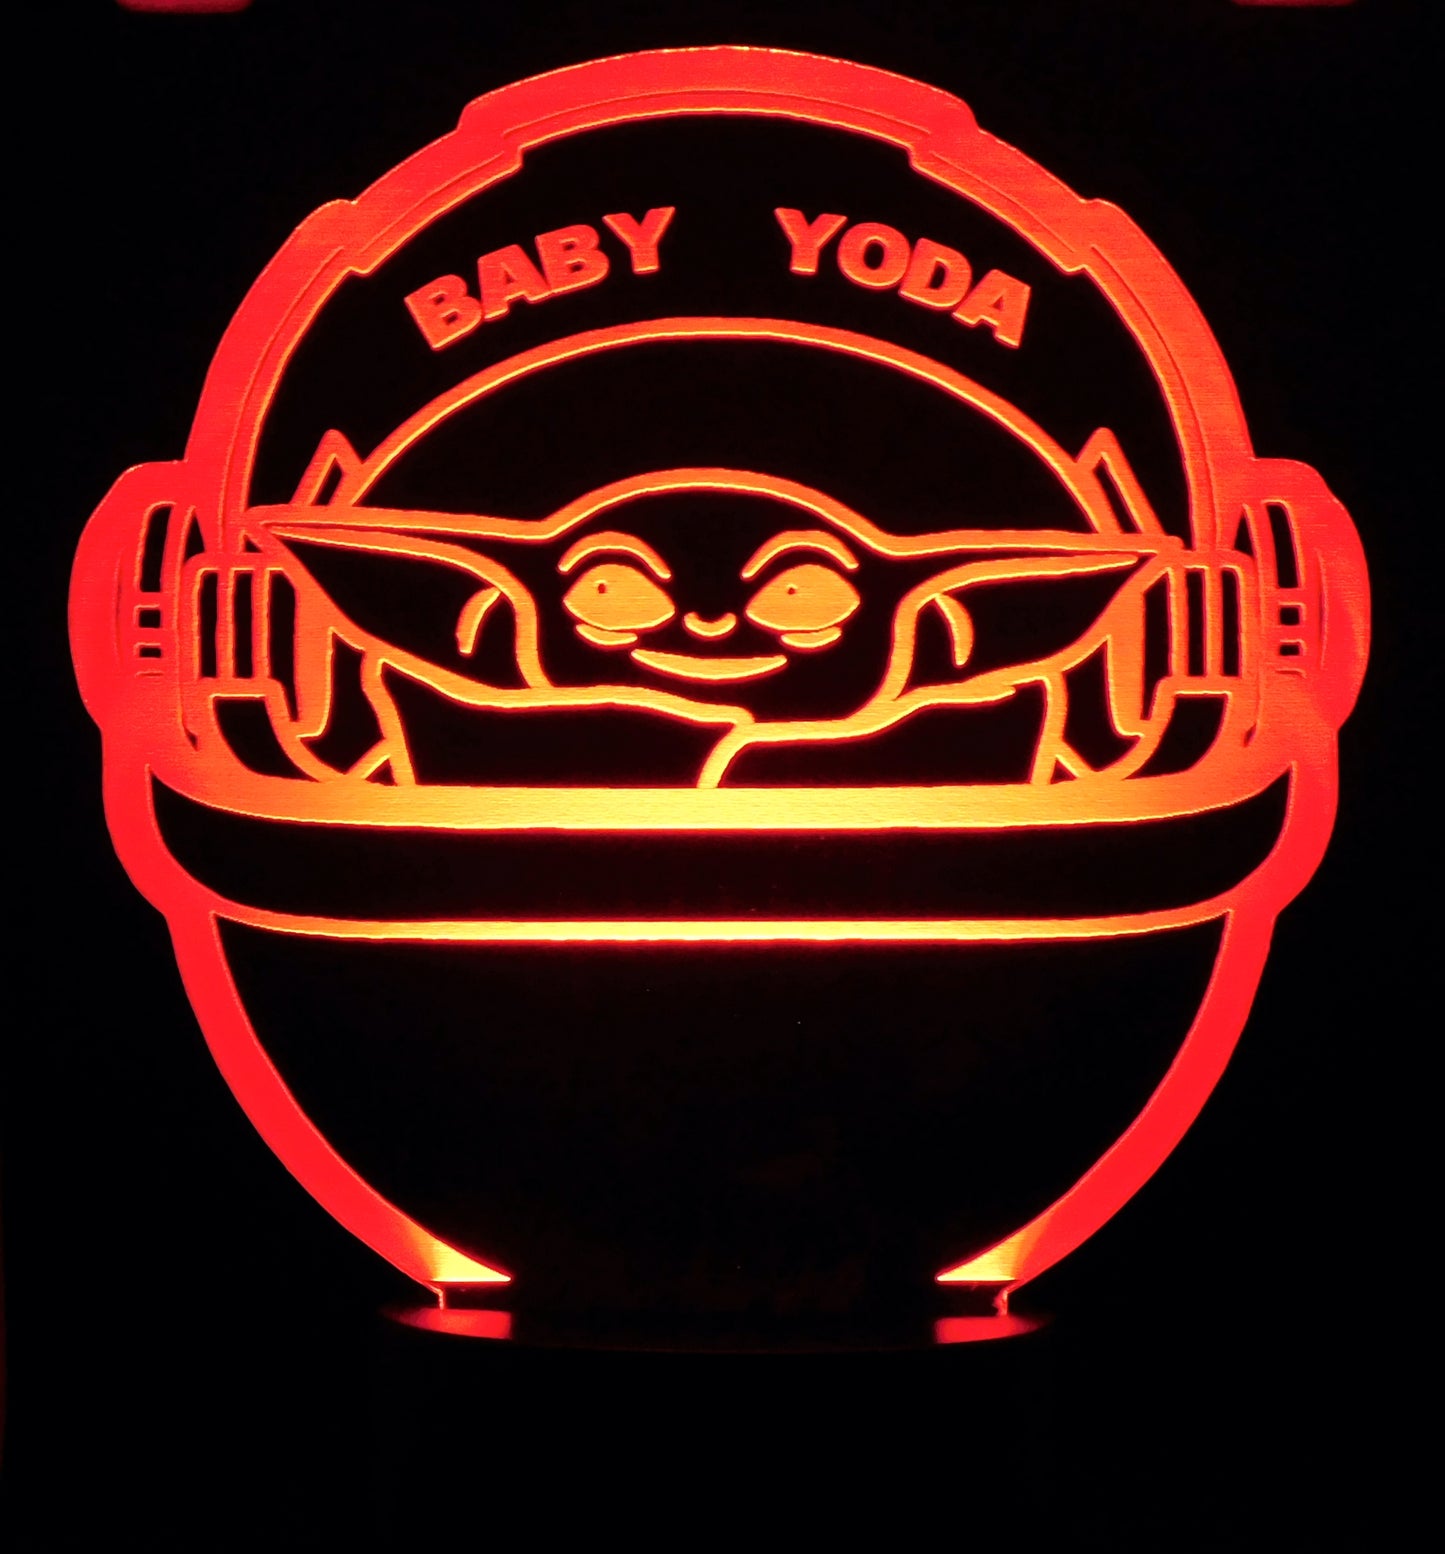 Baby Yoda 3-D Optical Illusion LED Multicolor Lamp